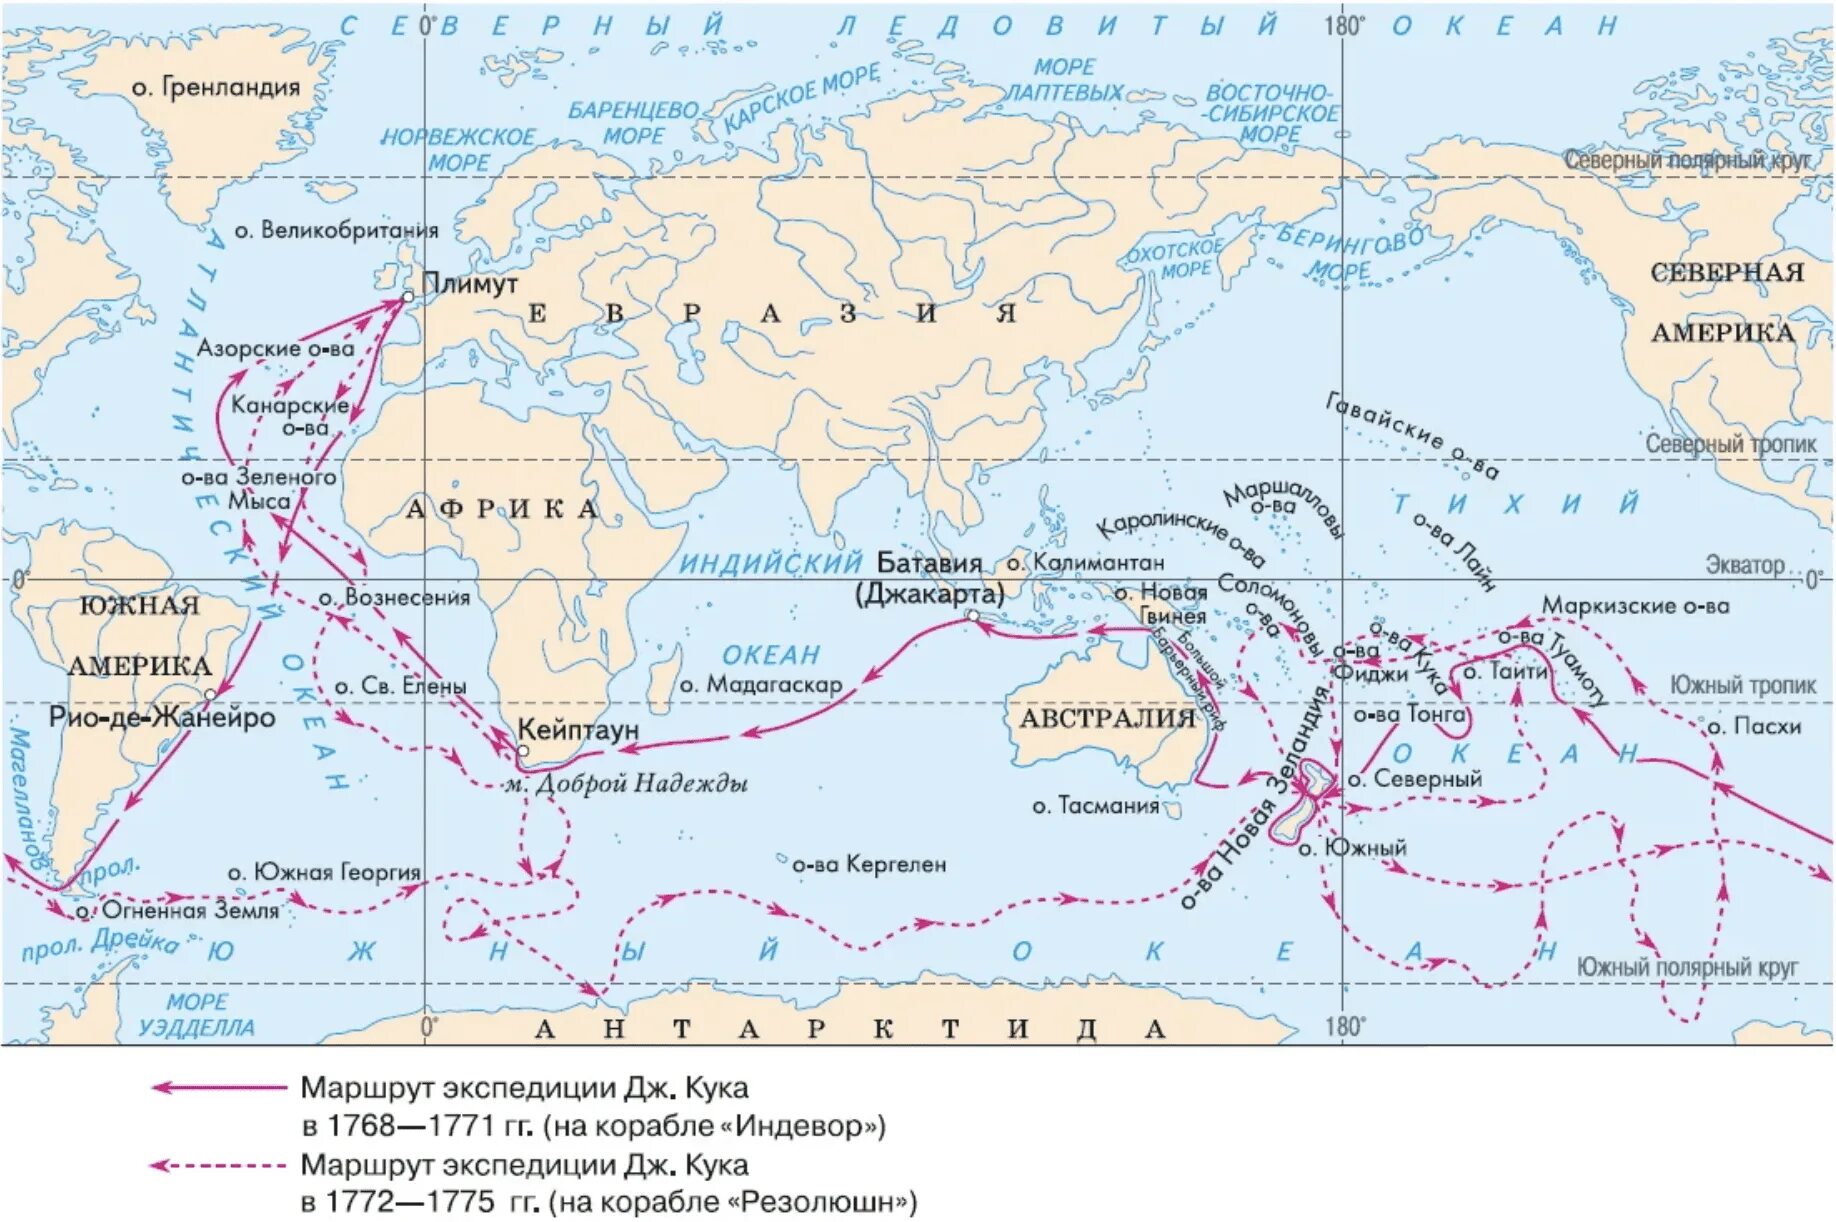 Путешествие Джеймса Кука 1768 на карте. Маршрут экспедиции Джеймса Кука на карте. Маршрут Джеймса Кука на карте 1768-1771.